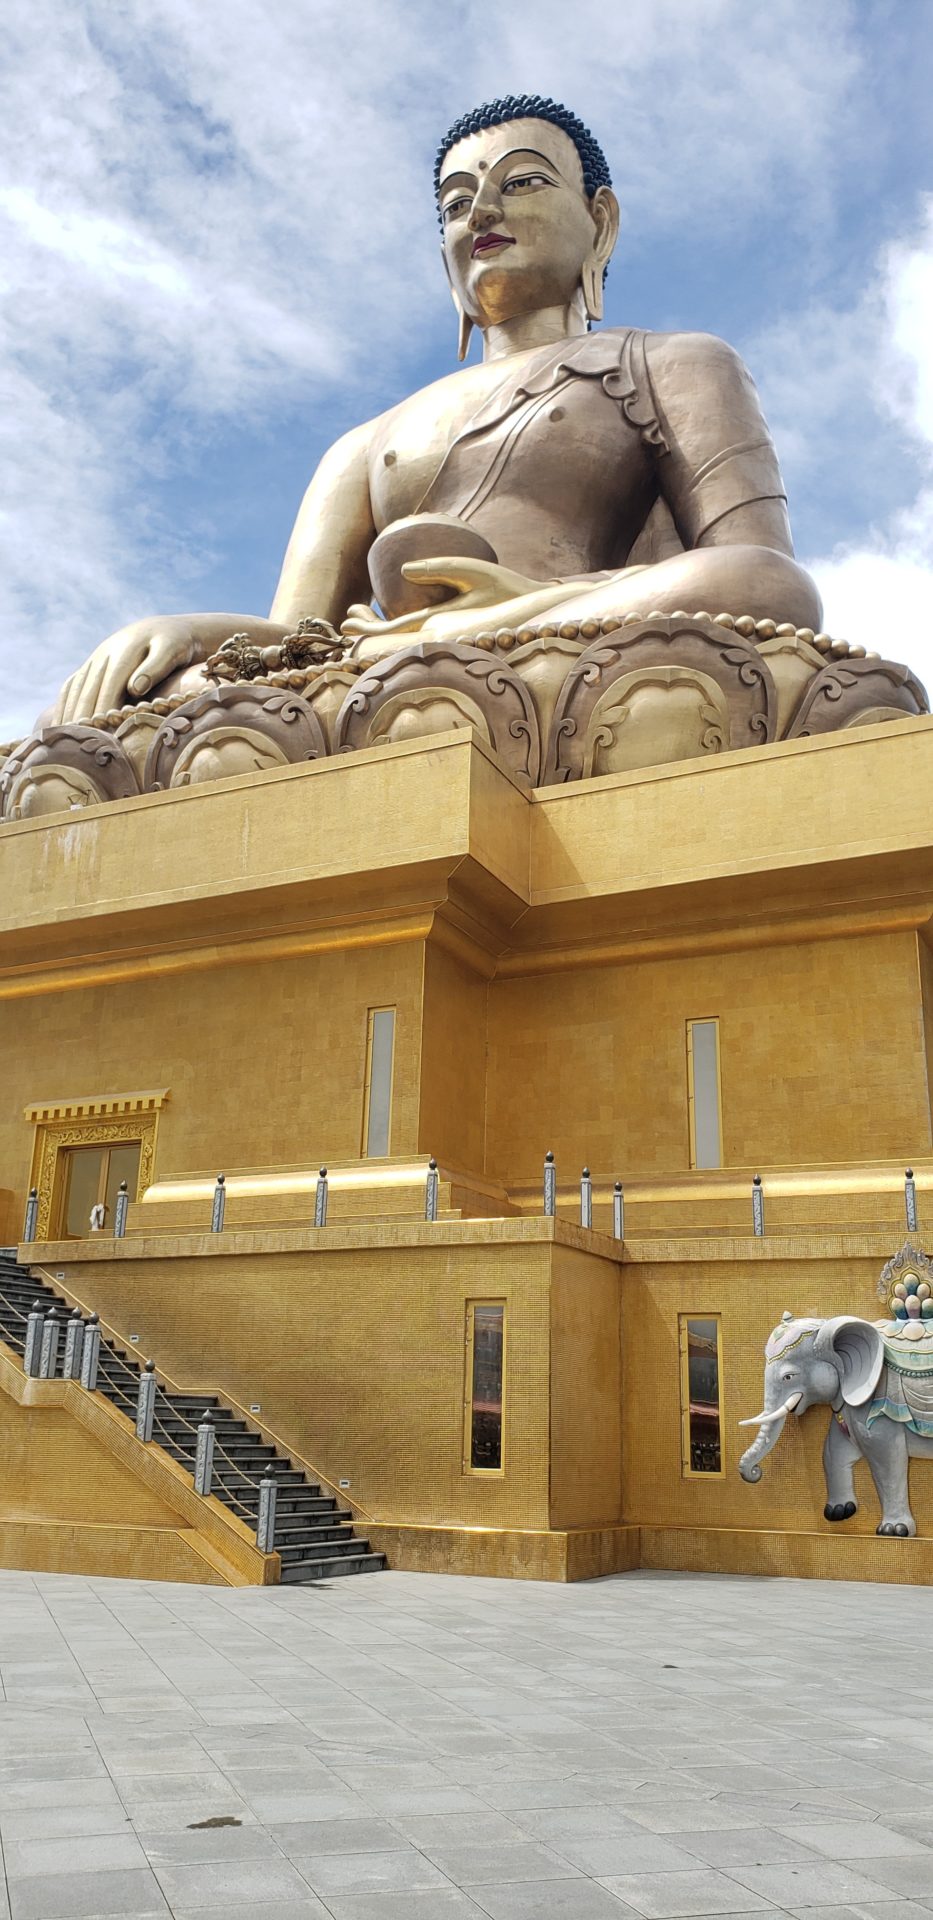 a large gold statue of a buddha on a gold platform